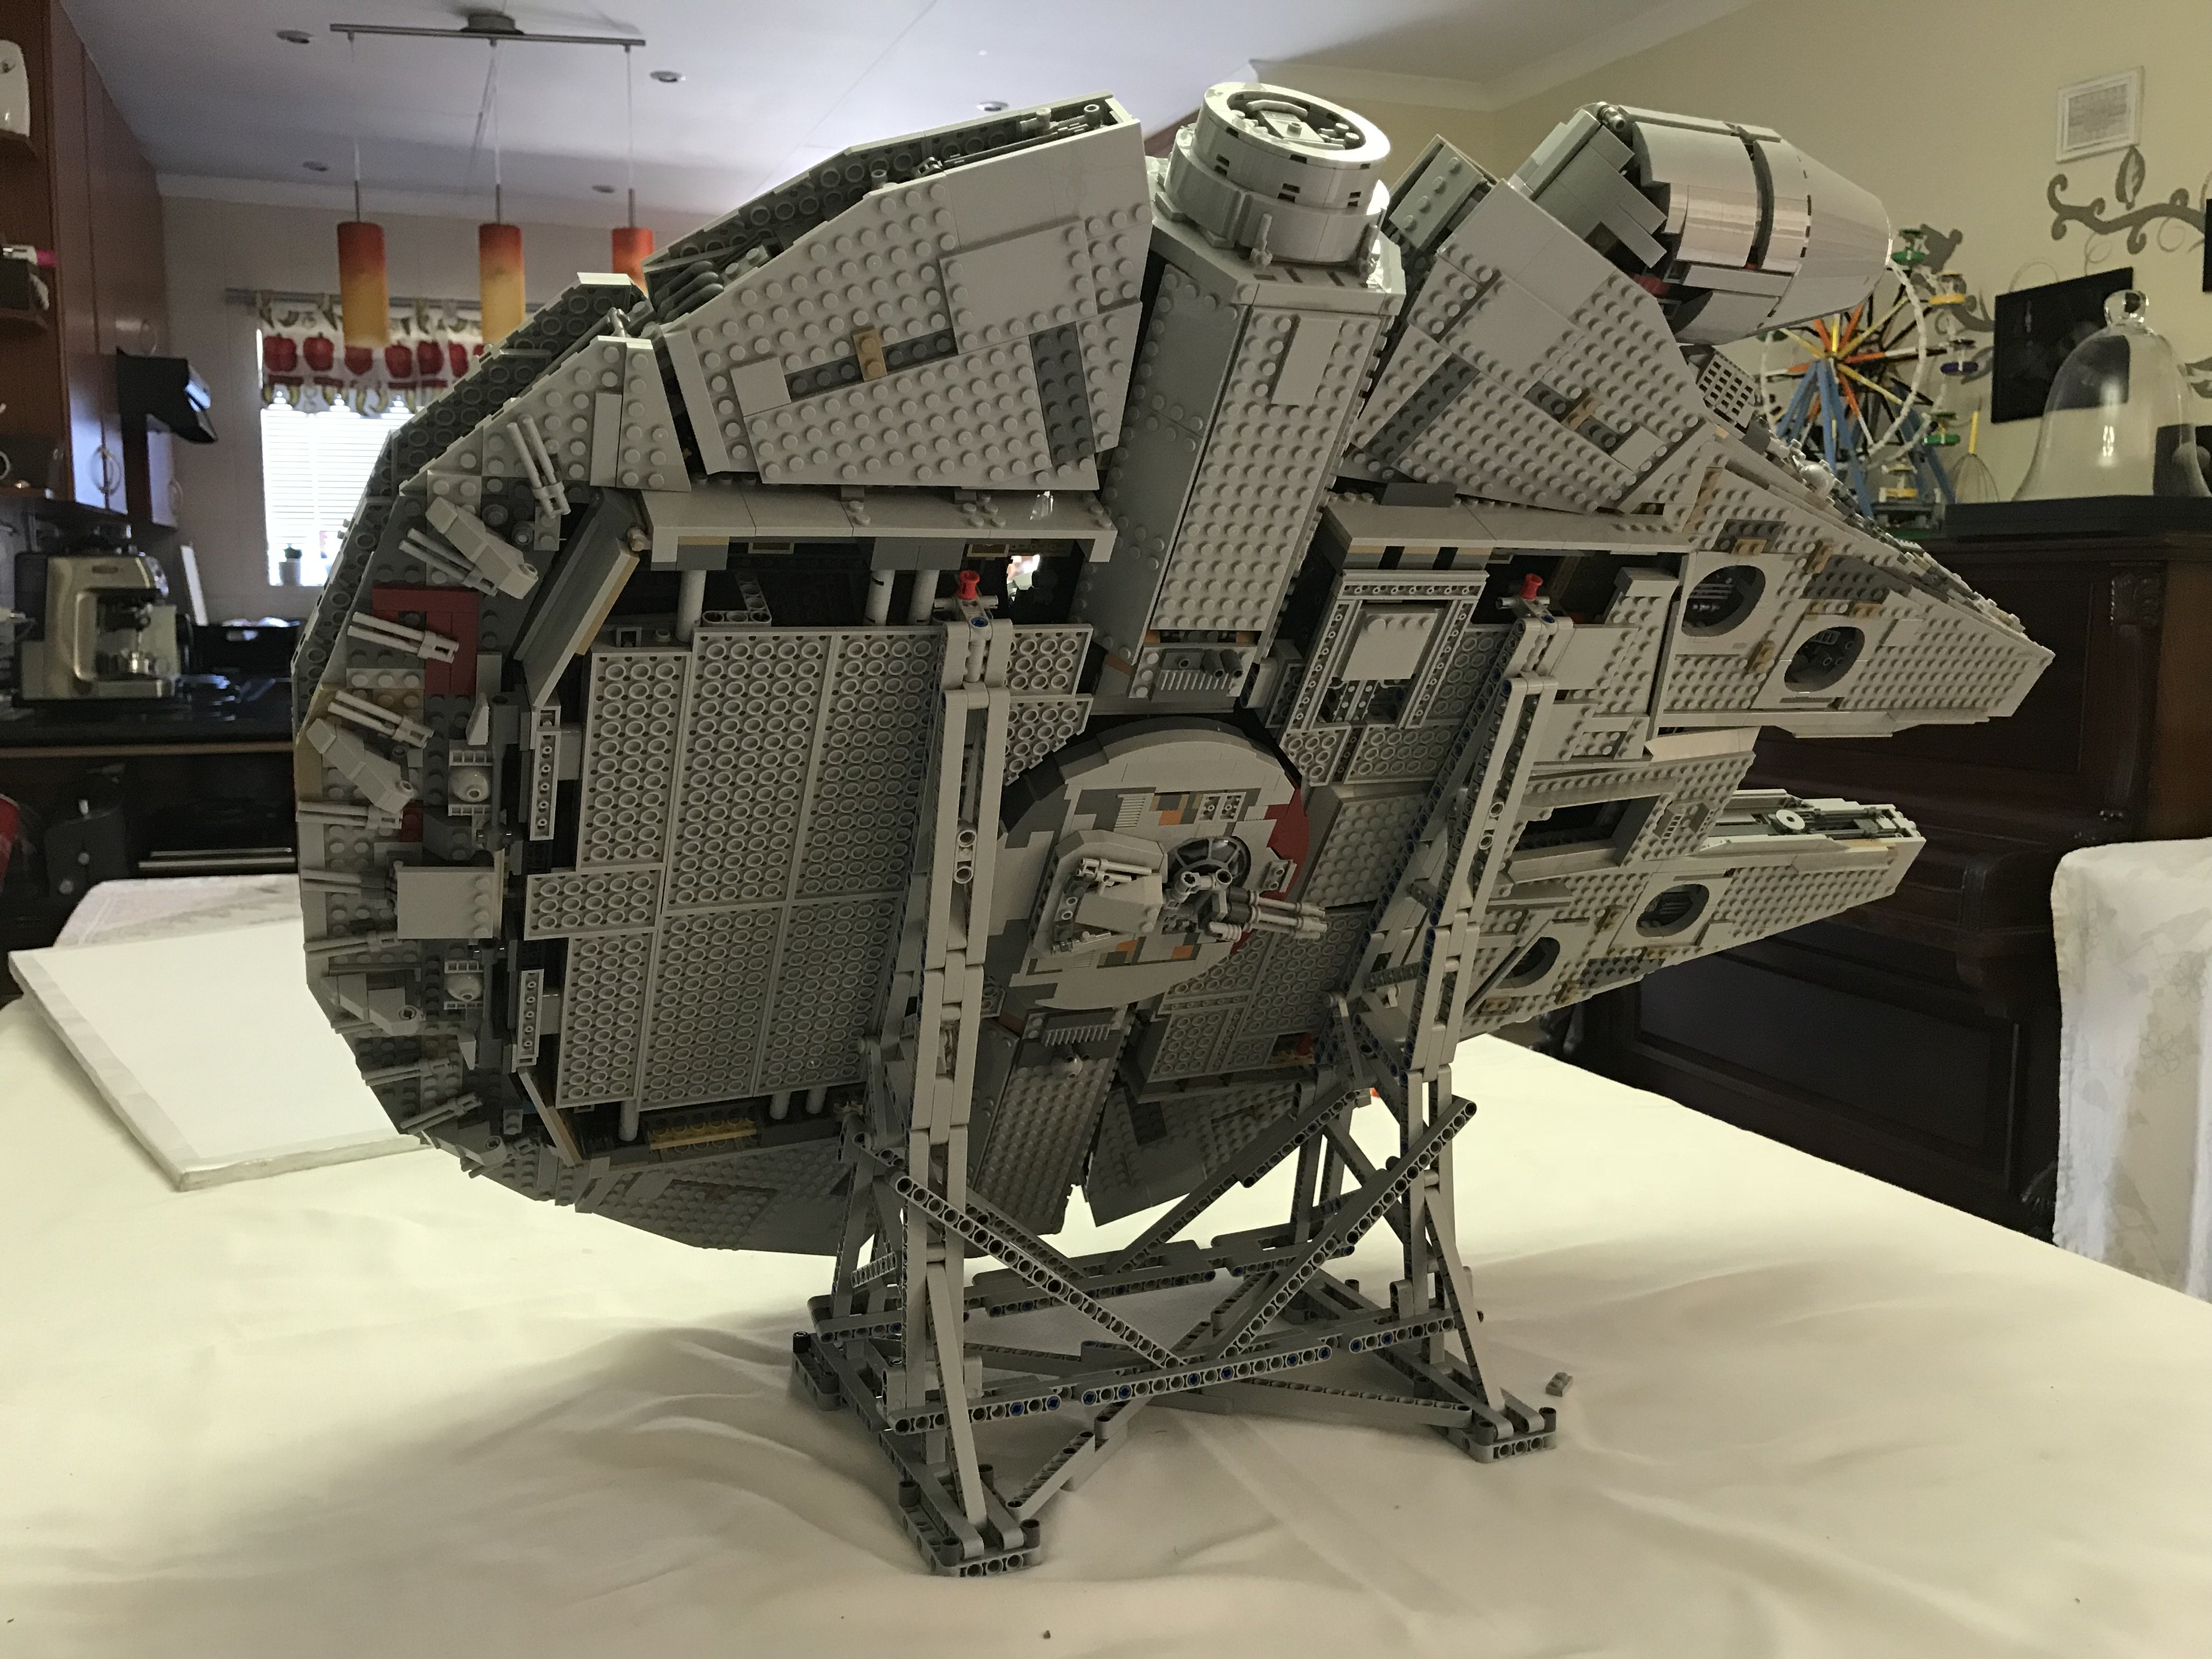 TopBrixx Support pour Lego Millennium Falcon 75192, Support